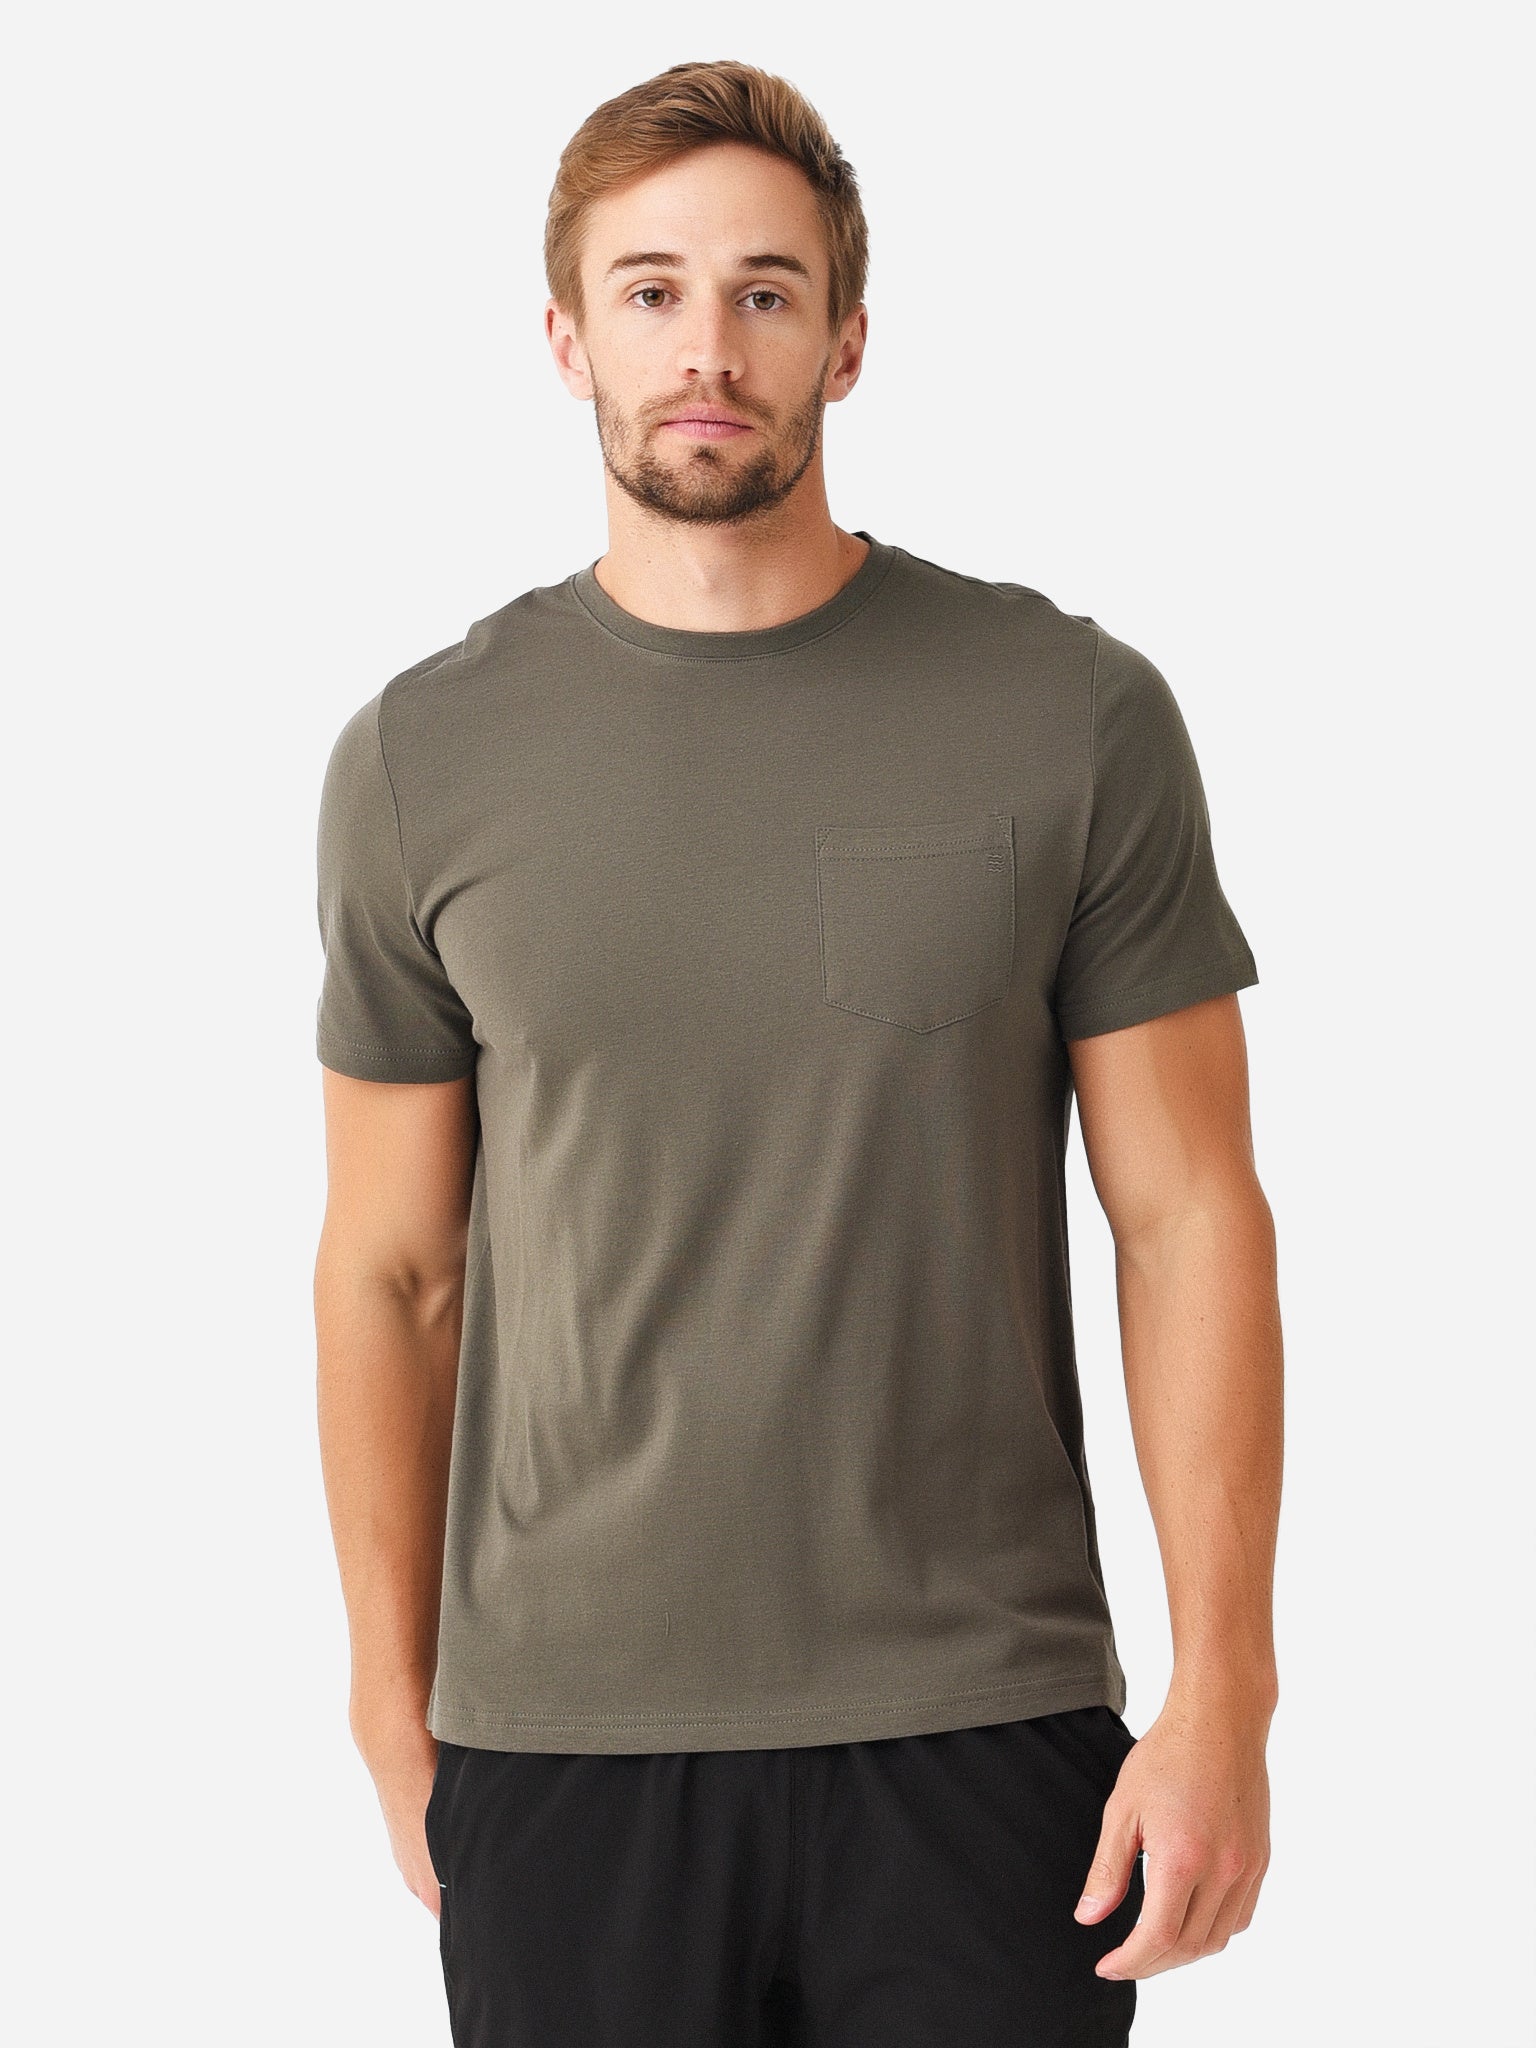 Men's Bamboo Cotton Crew Neck T-Shirts